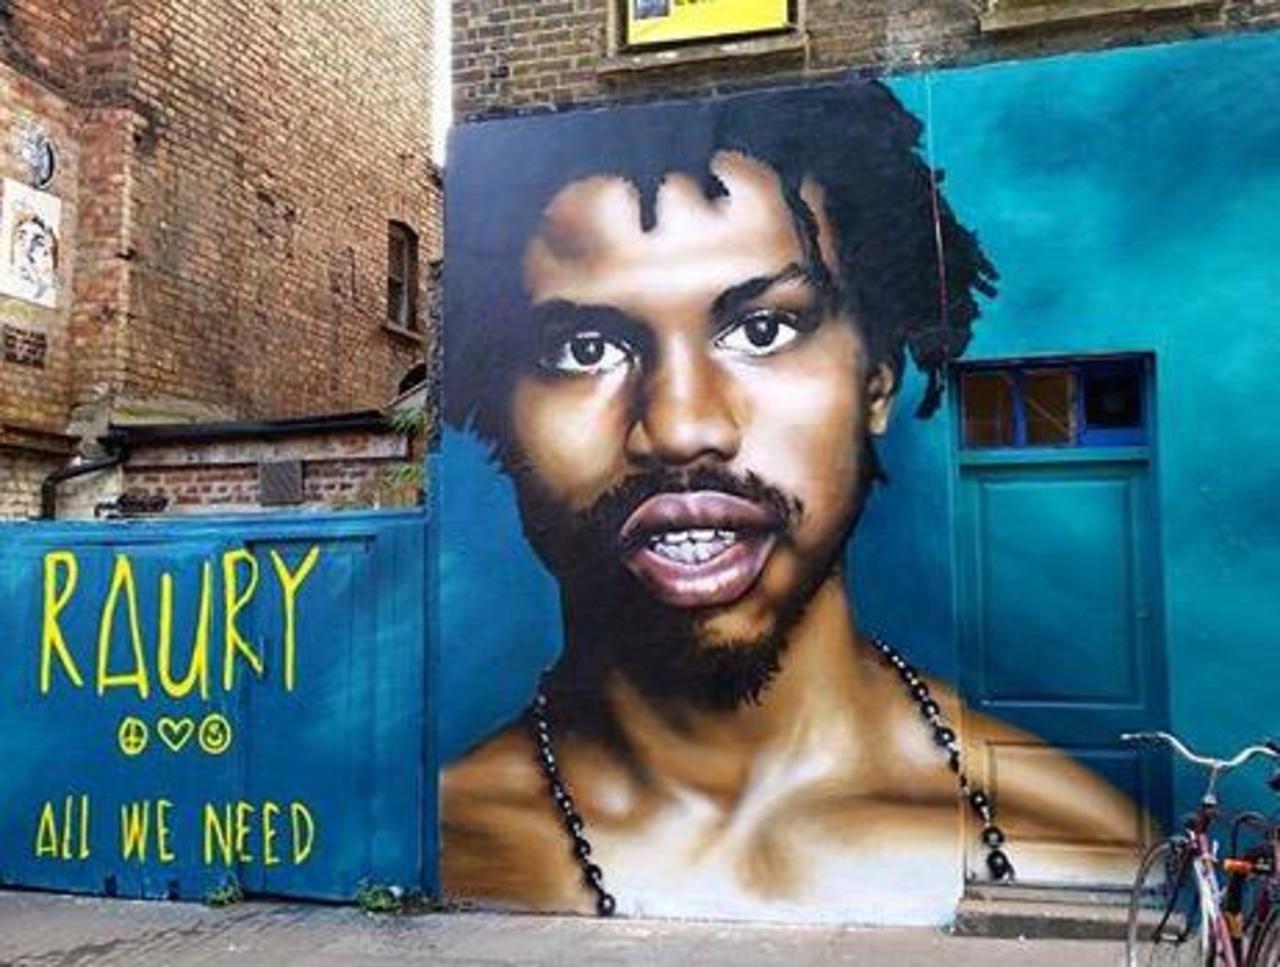 New Street Art of Raury by Olliver Switch in Brick Lane 

#art #graffiti #mural #streetart http://t.co/LssODexjcd googlestreetart chinato…